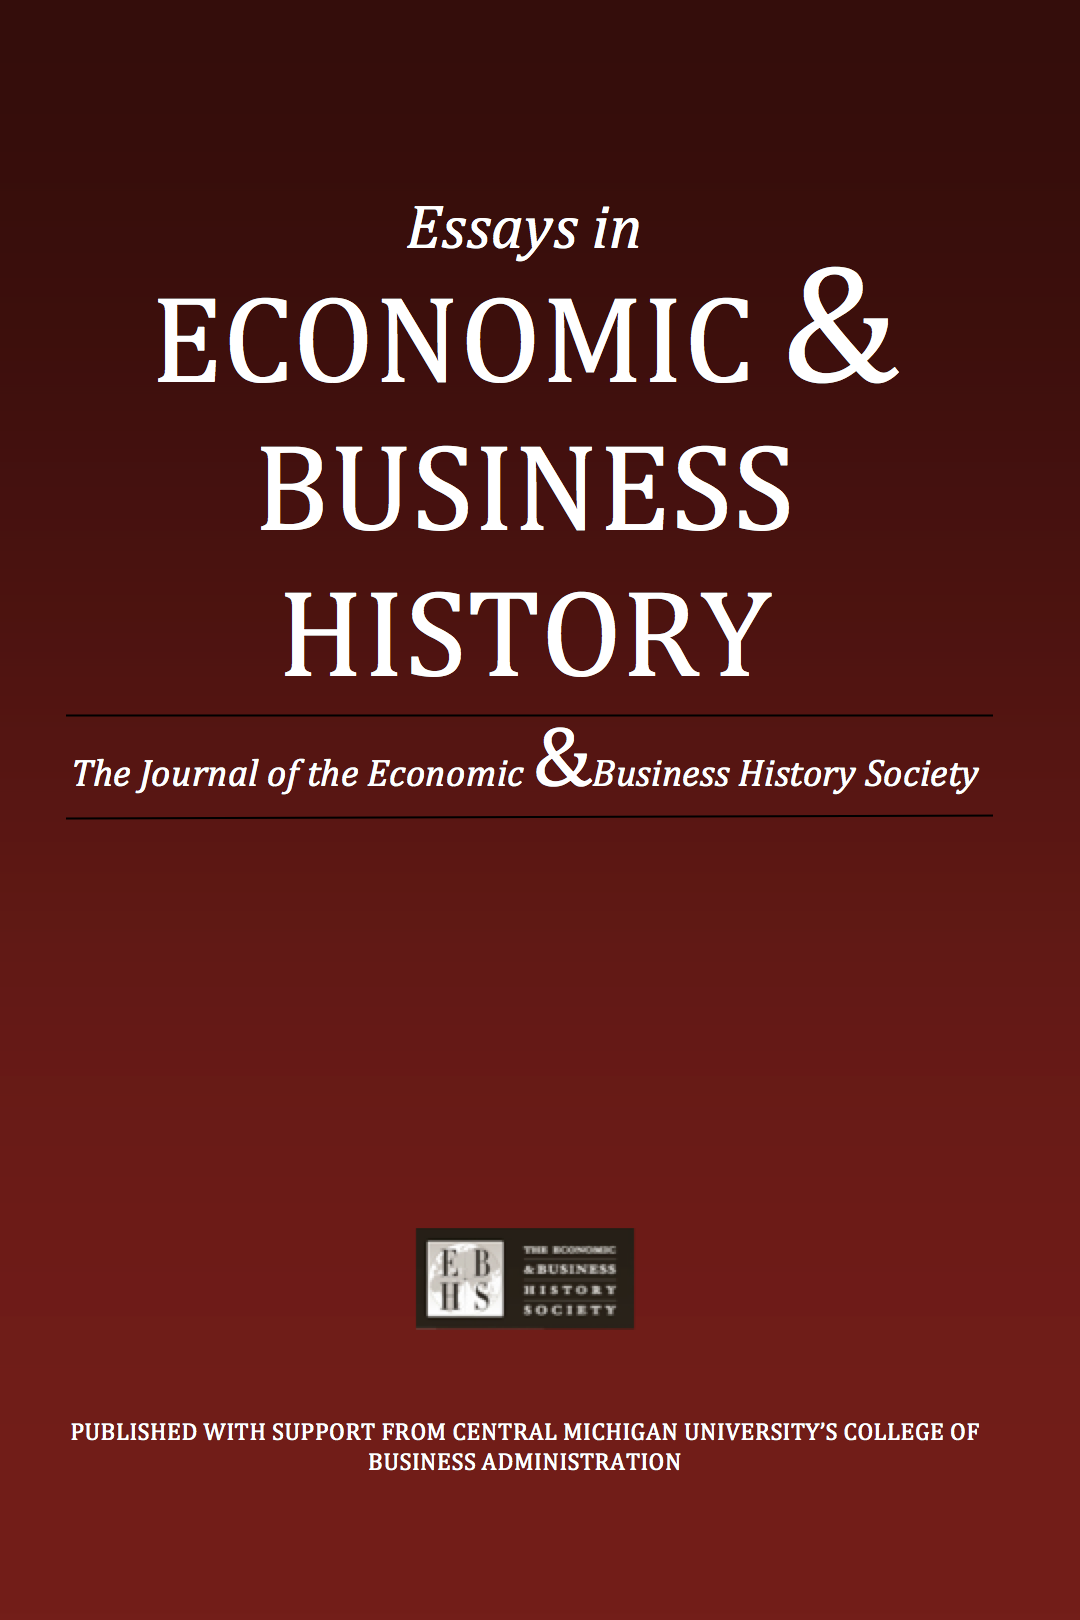 Essays in Economic & Business History 2014